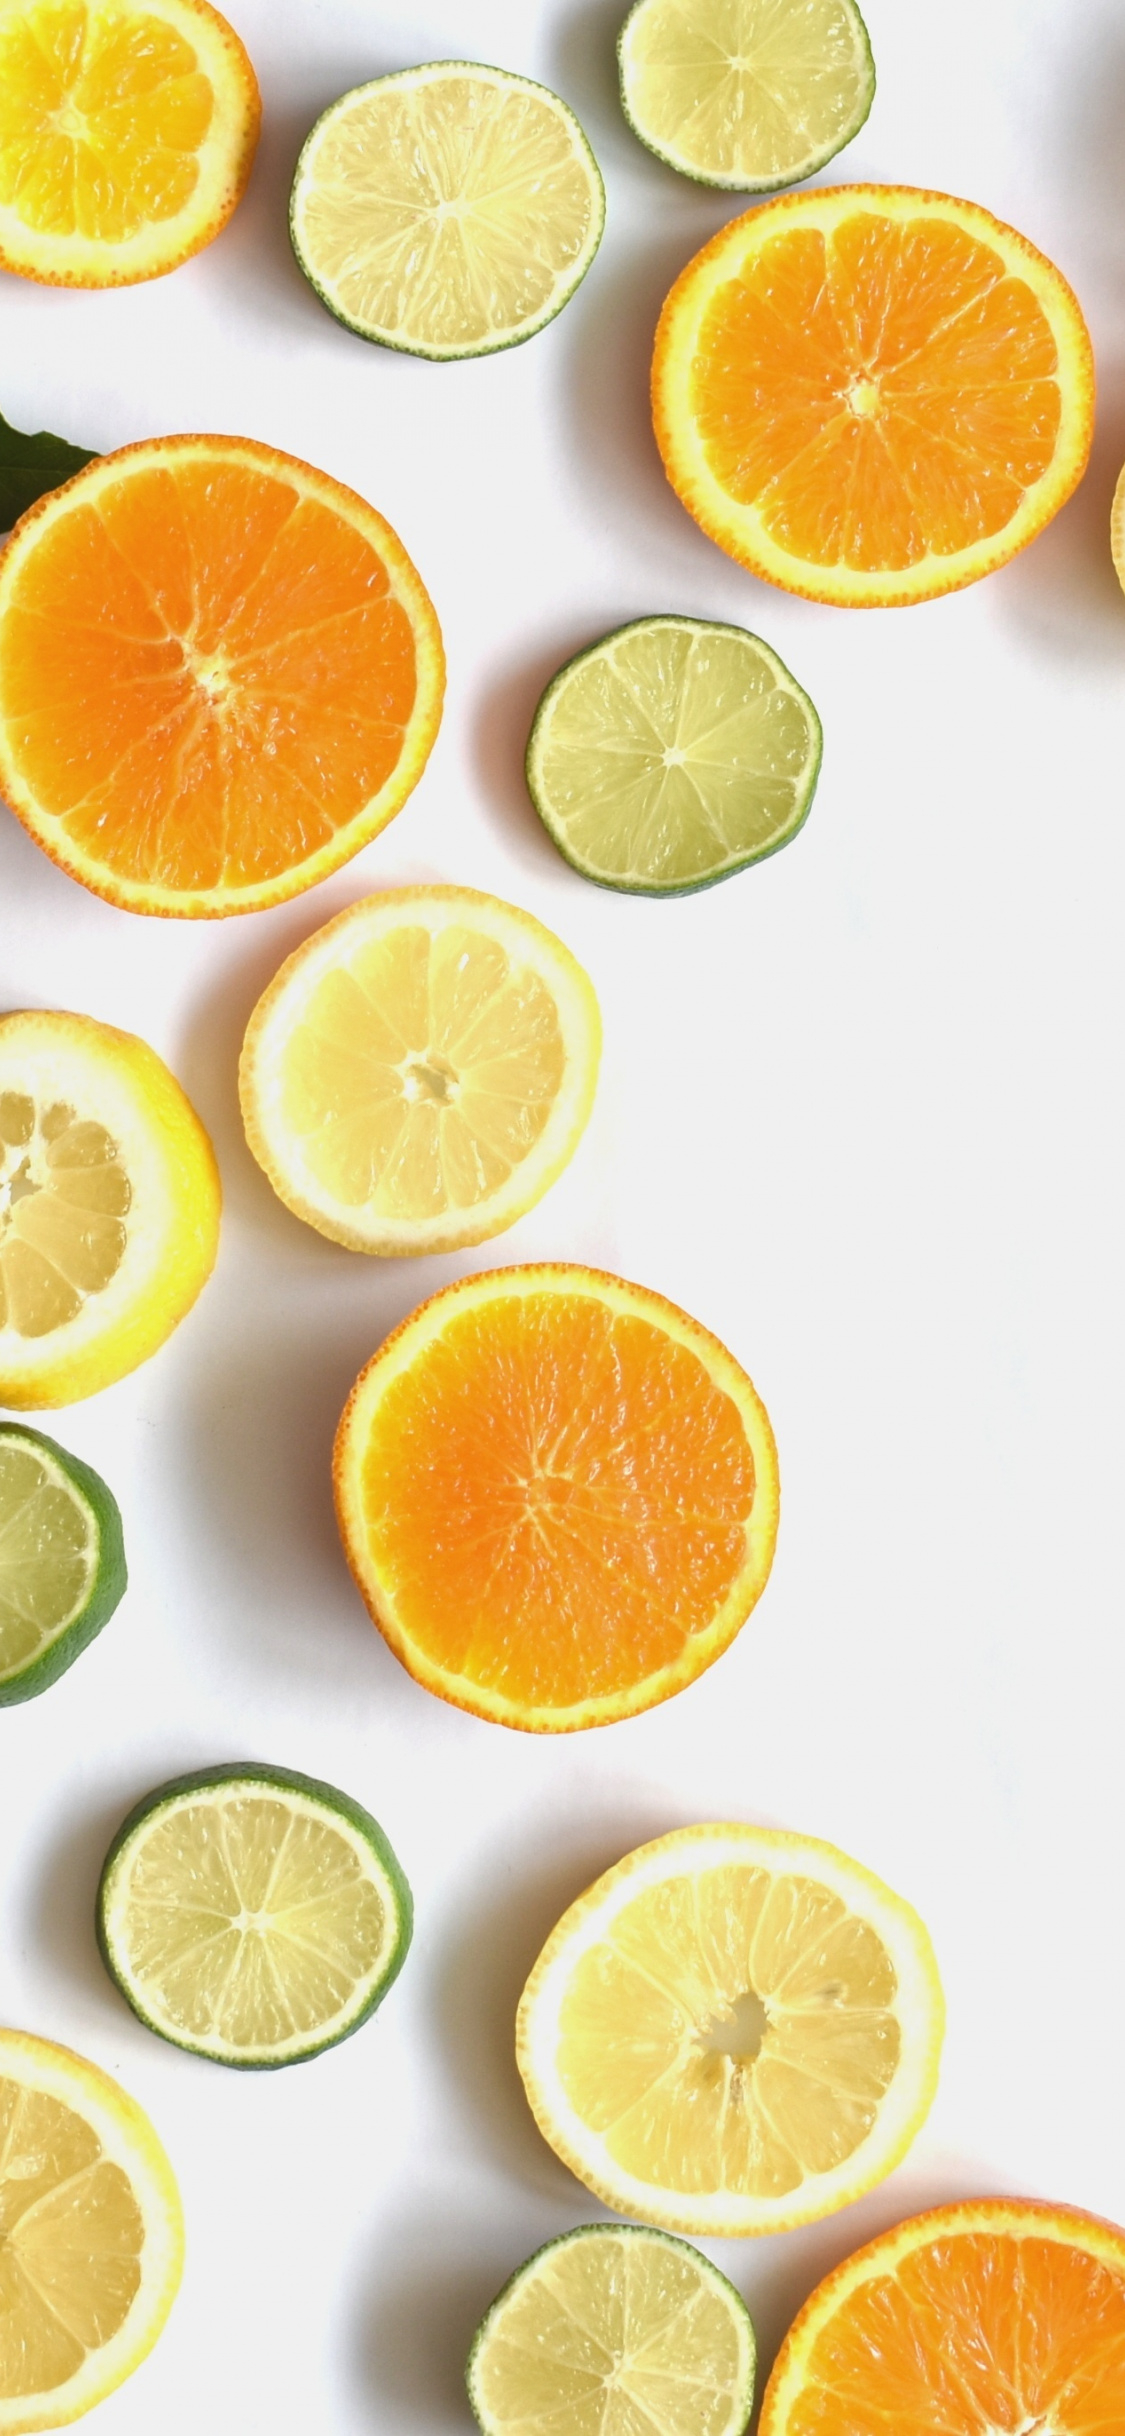 Fruits, Slices, Lemon And Oranges, Wallpaper - Lemon Background Iphone X - HD Wallpaper 